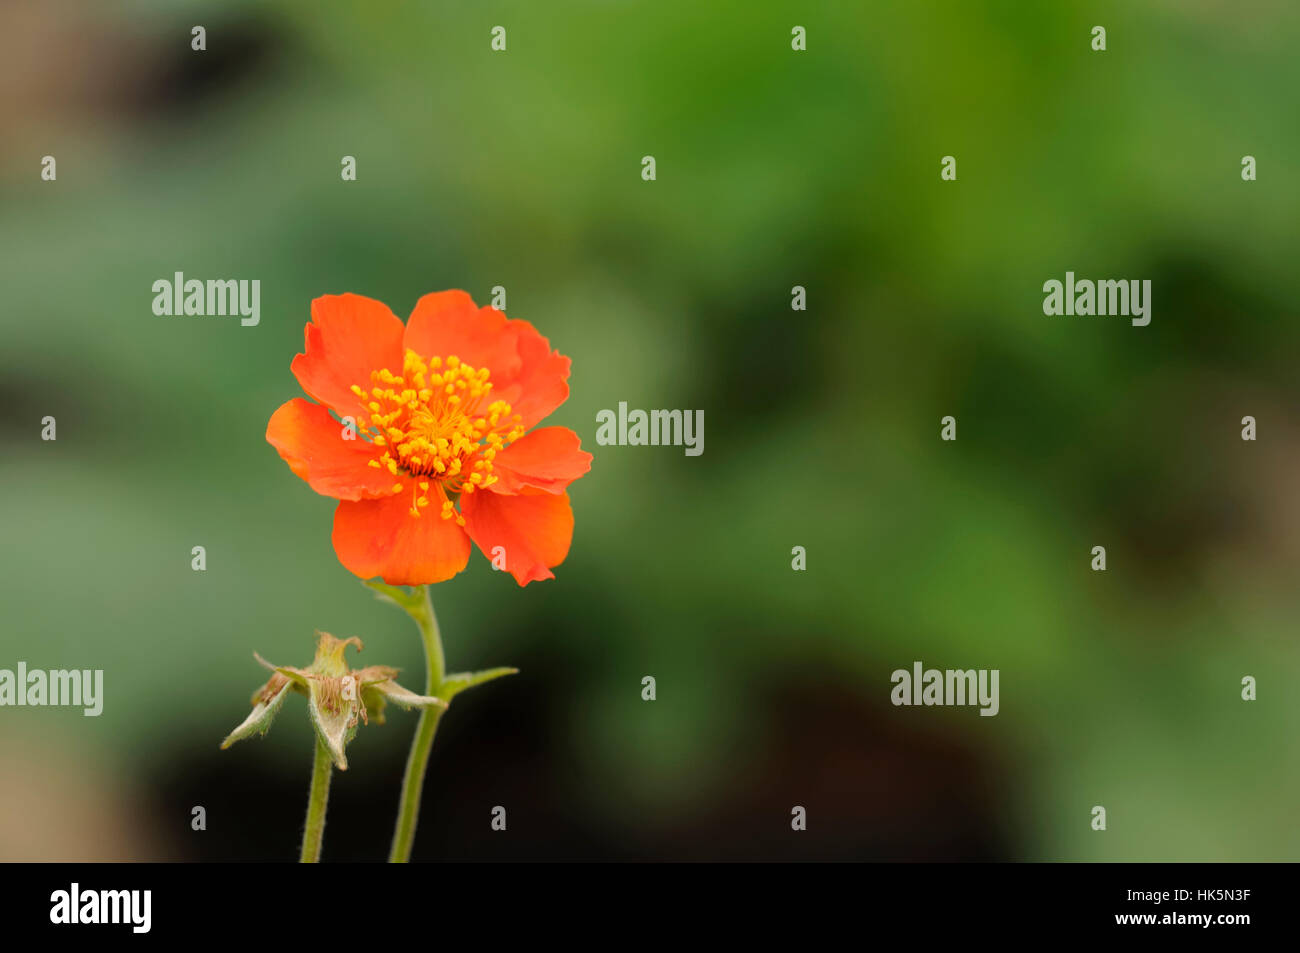 plant, orange, garden, plant, flower, green, bloom, blossom, flourish, Stock Photo